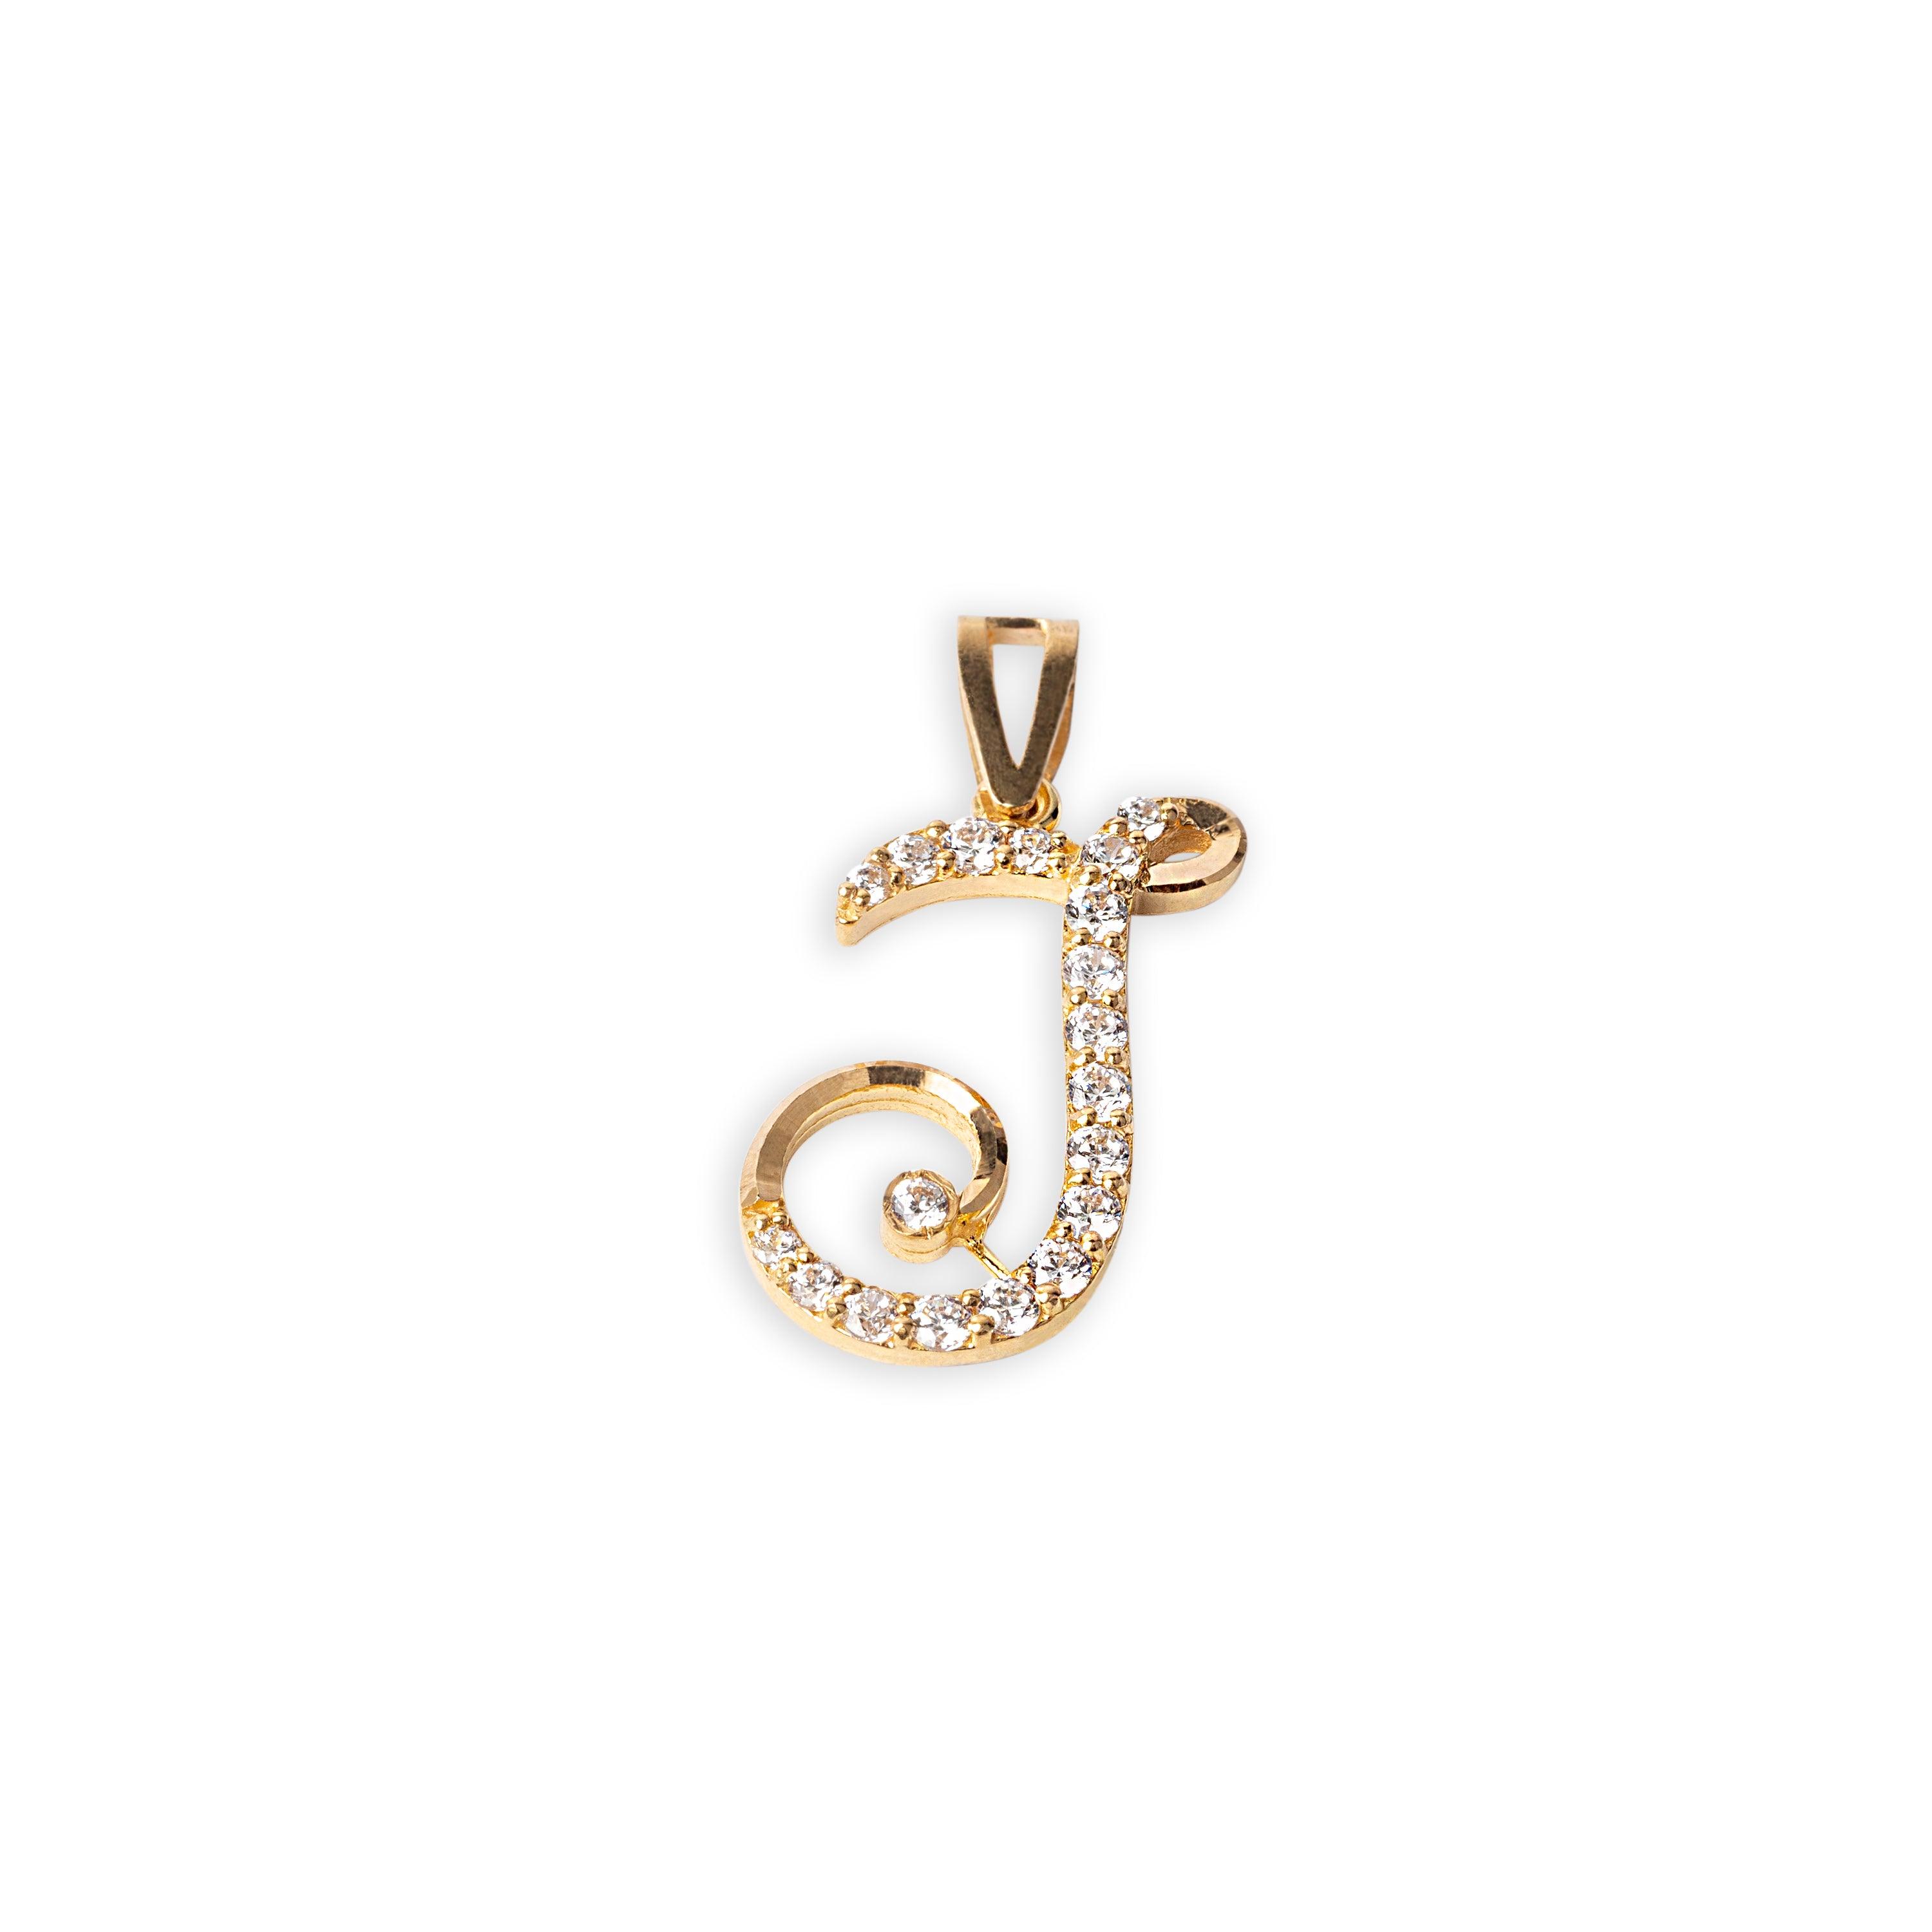 'J' 22ct Gold Initial Pendant with Cubic Zirconia Stones P-7039-J - Minar Jewellers